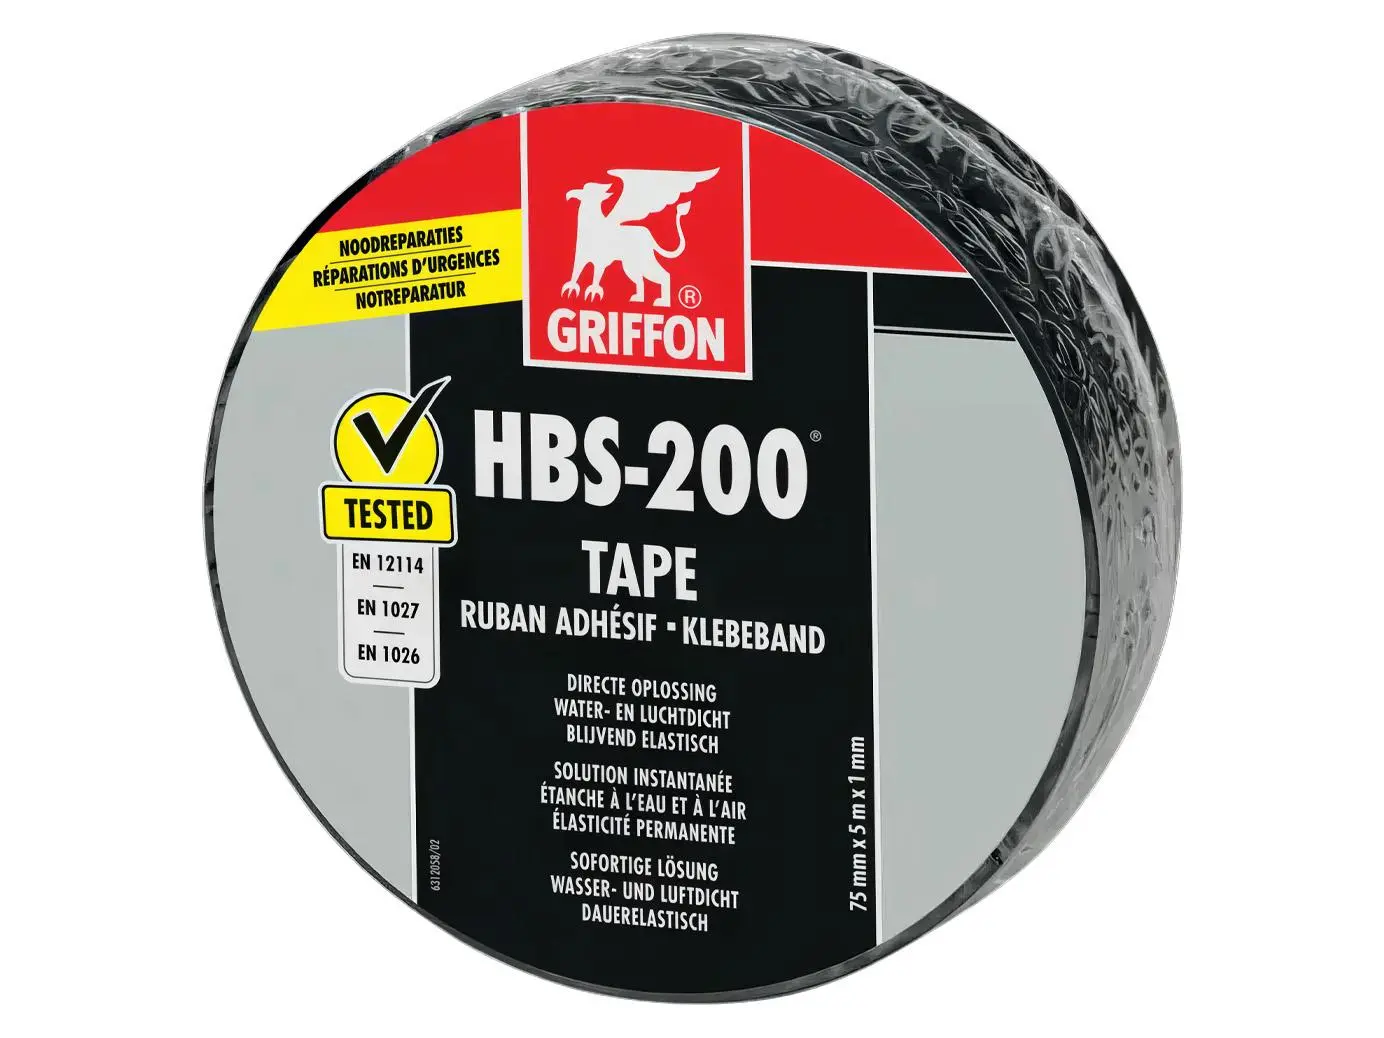 hbs-200 tape